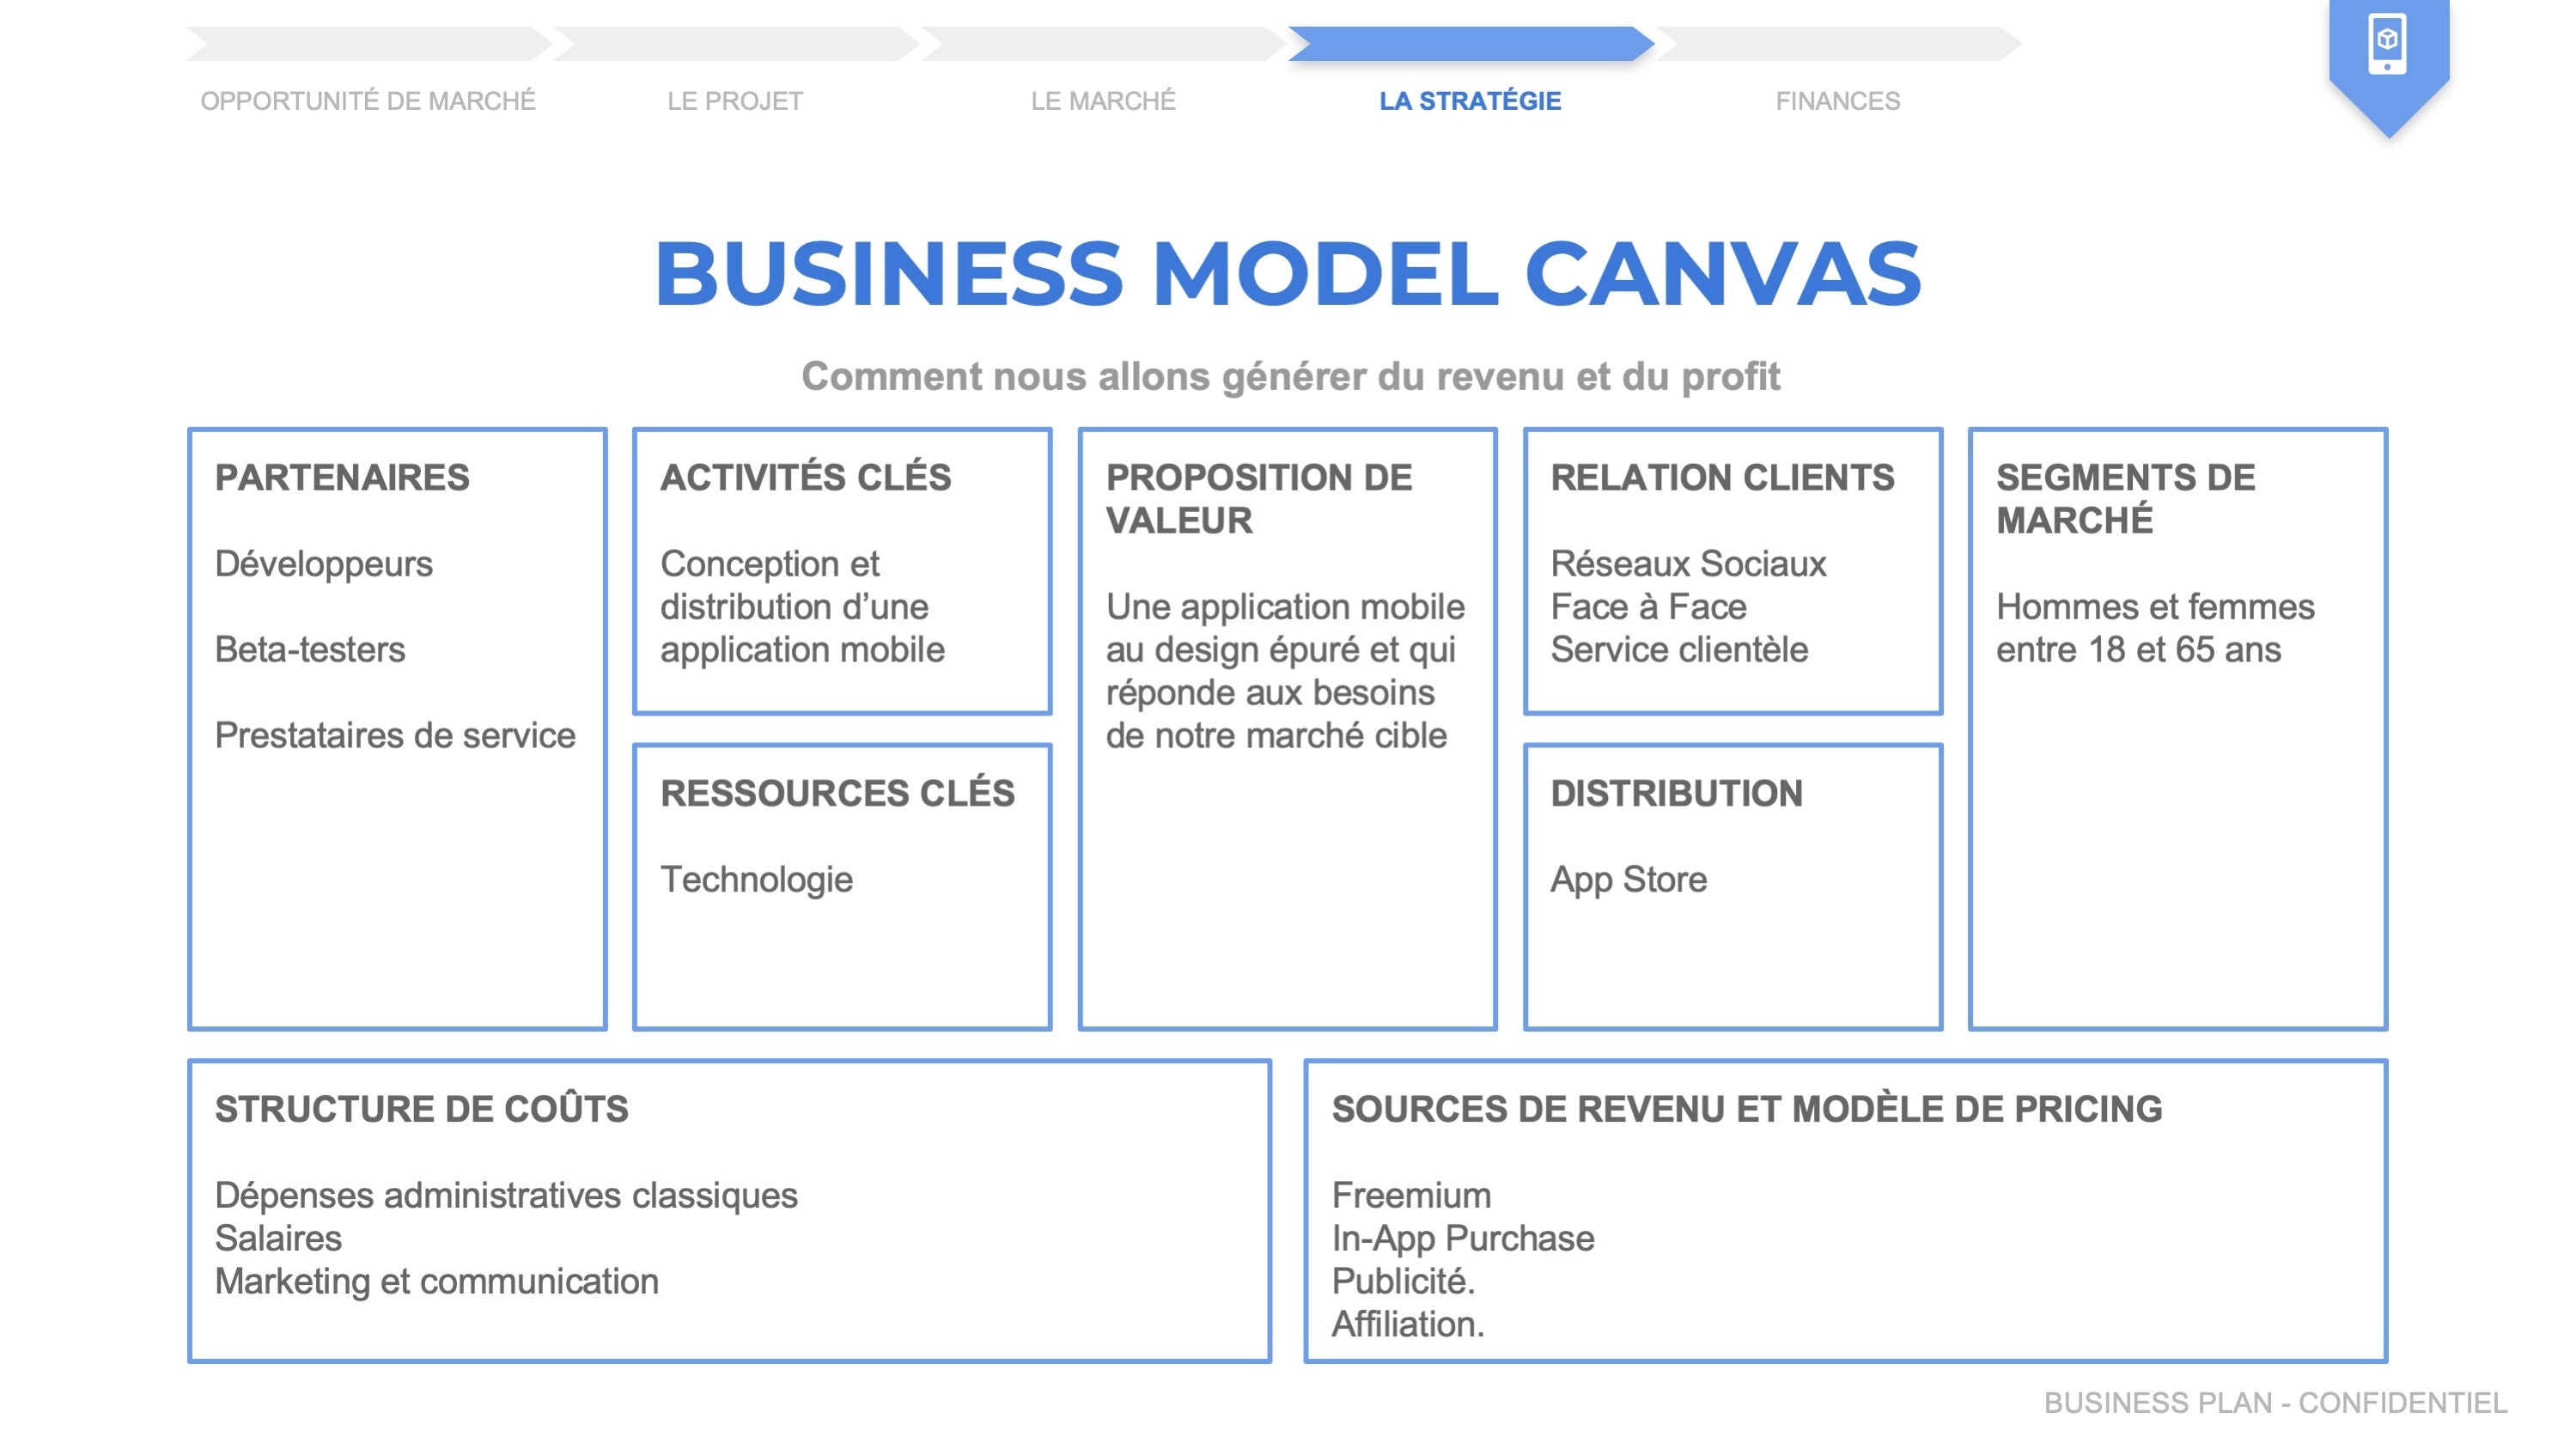 business plan application mobile pdf